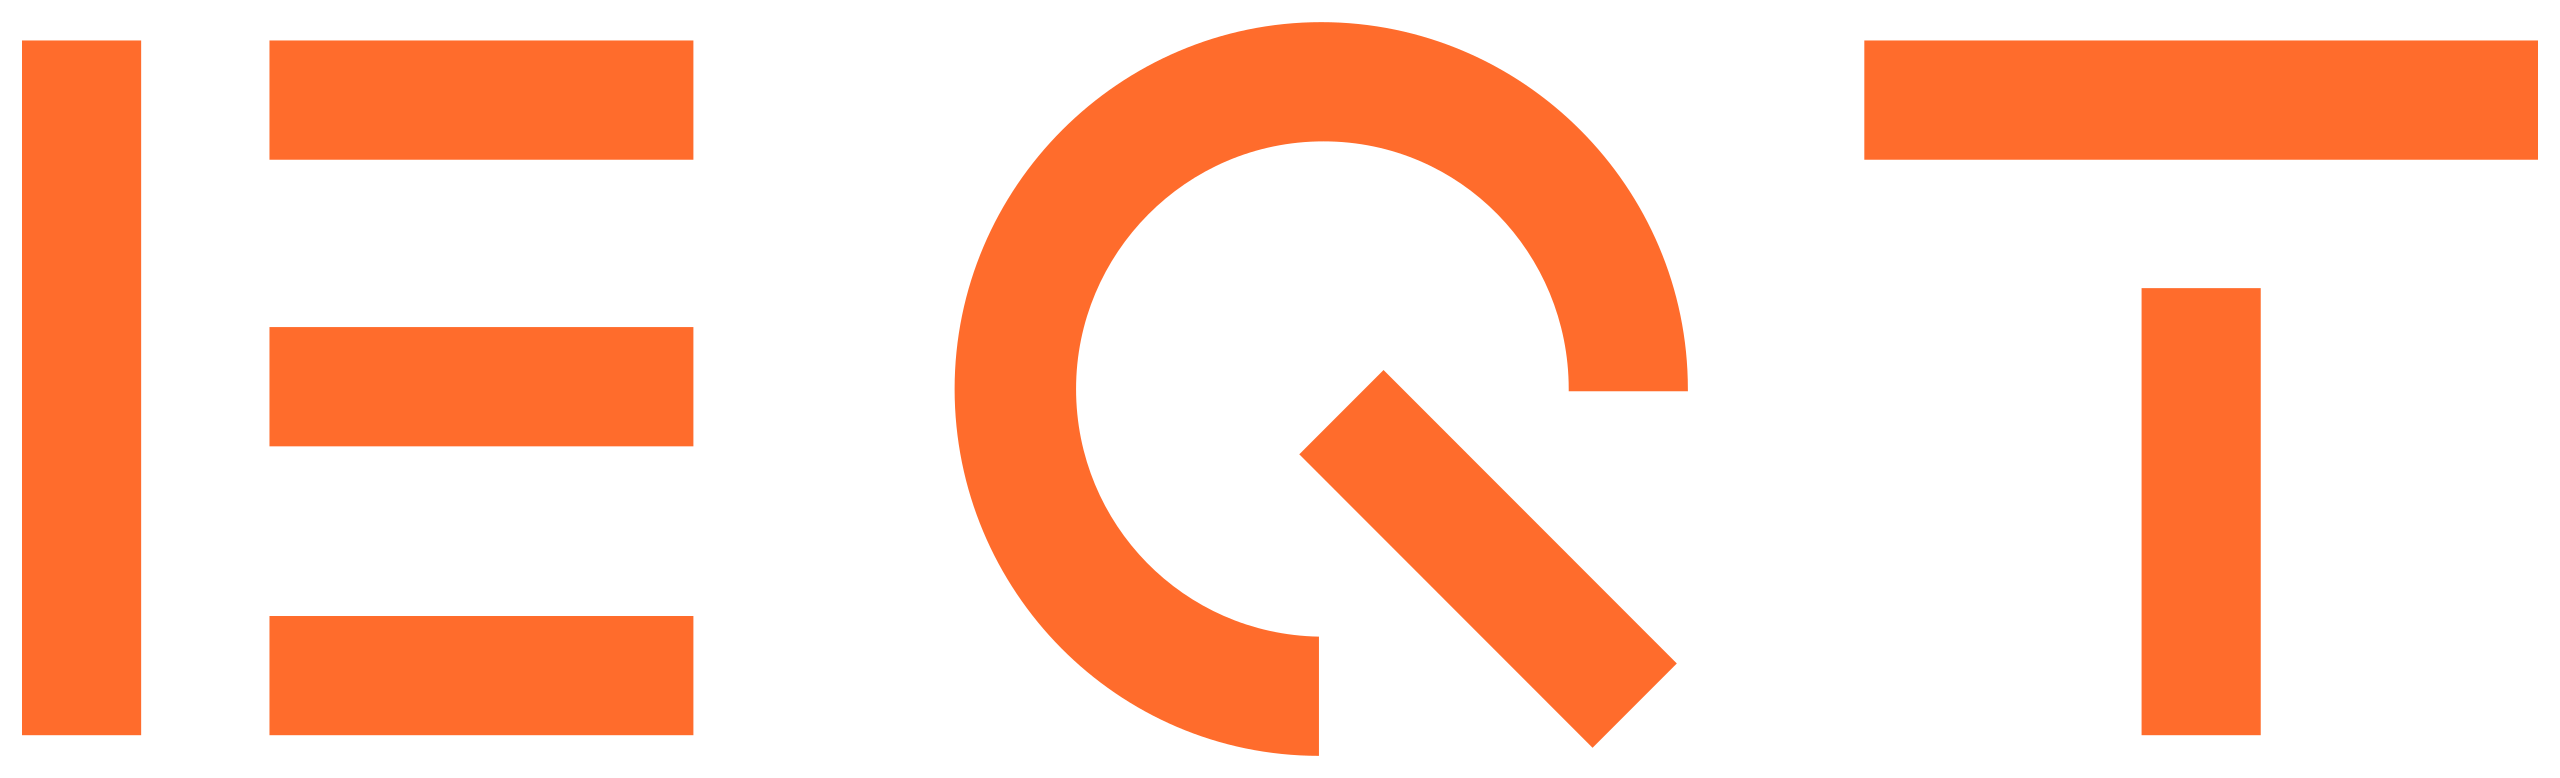 EQT Partners logo